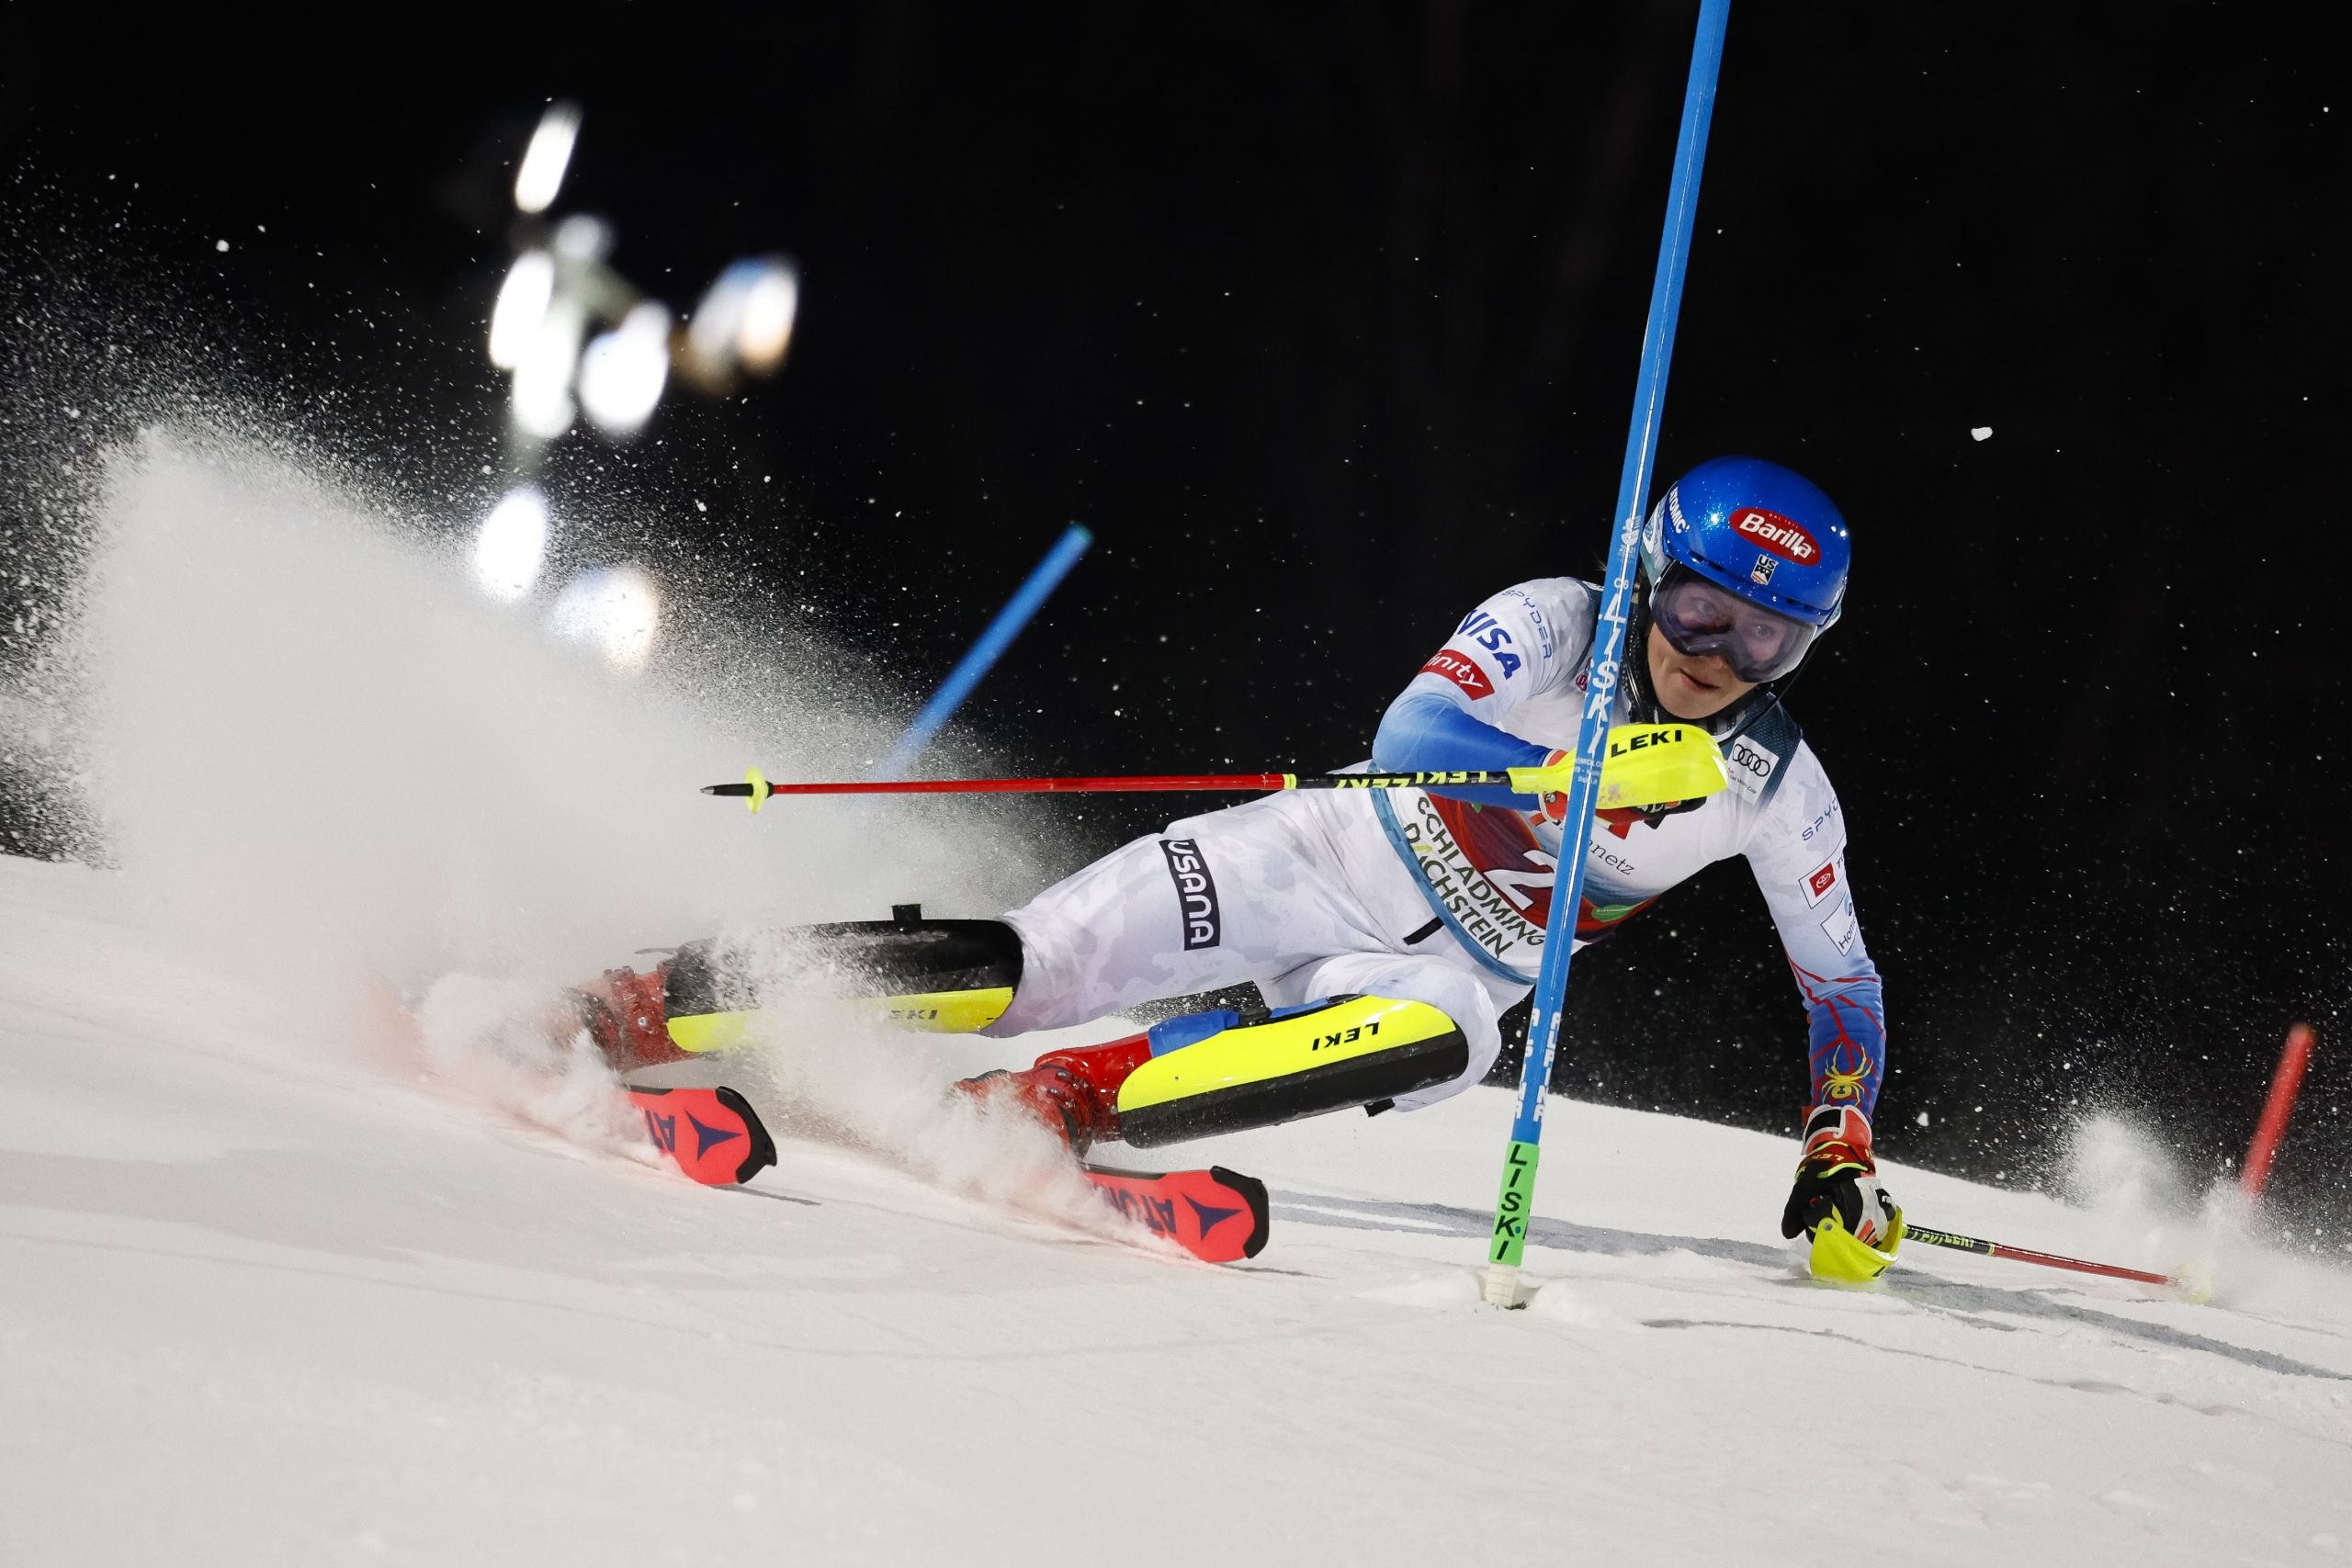 Slalom: Discipline involving downhill between poles or gates, Gliding on snow, Austria. 2560x1710 HD Wallpaper.